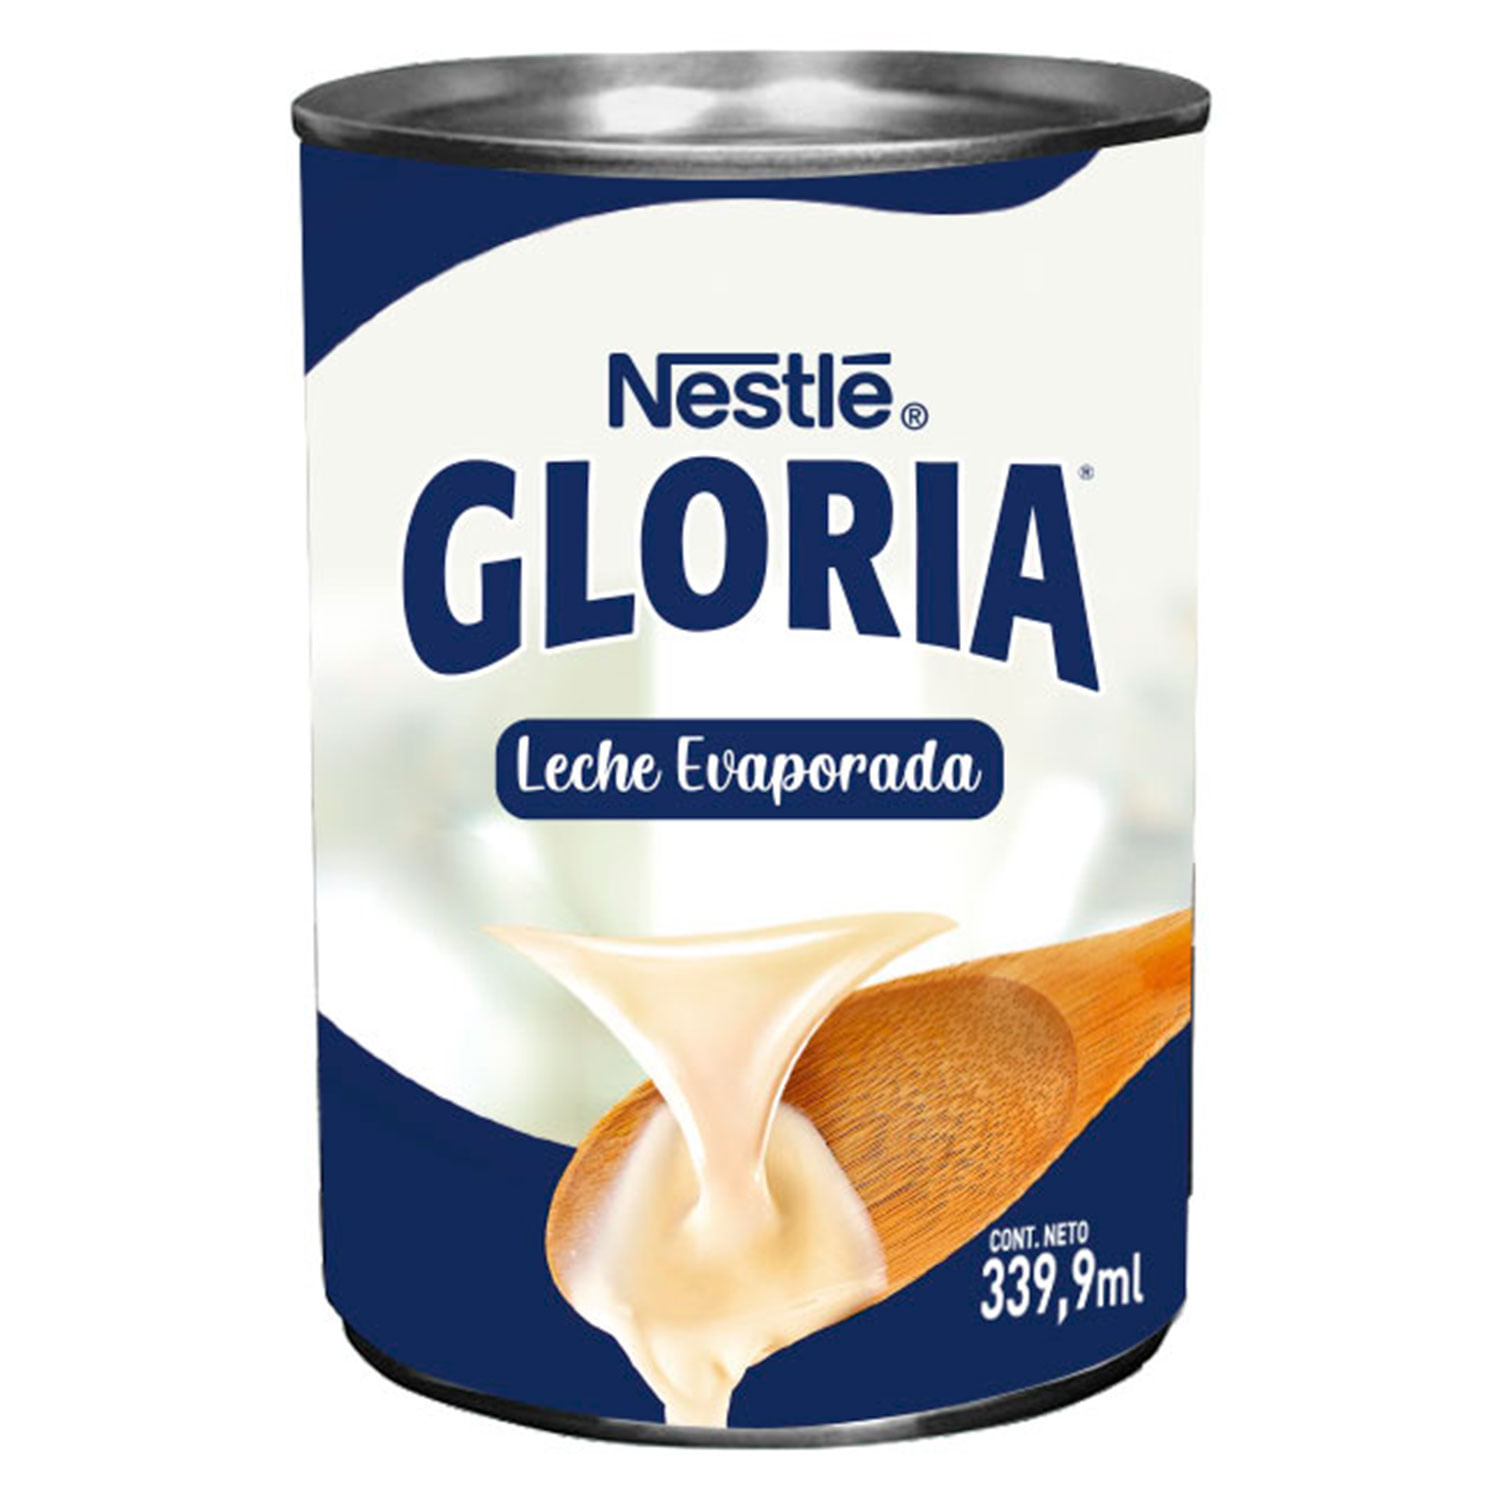 Crema de leche Gloria